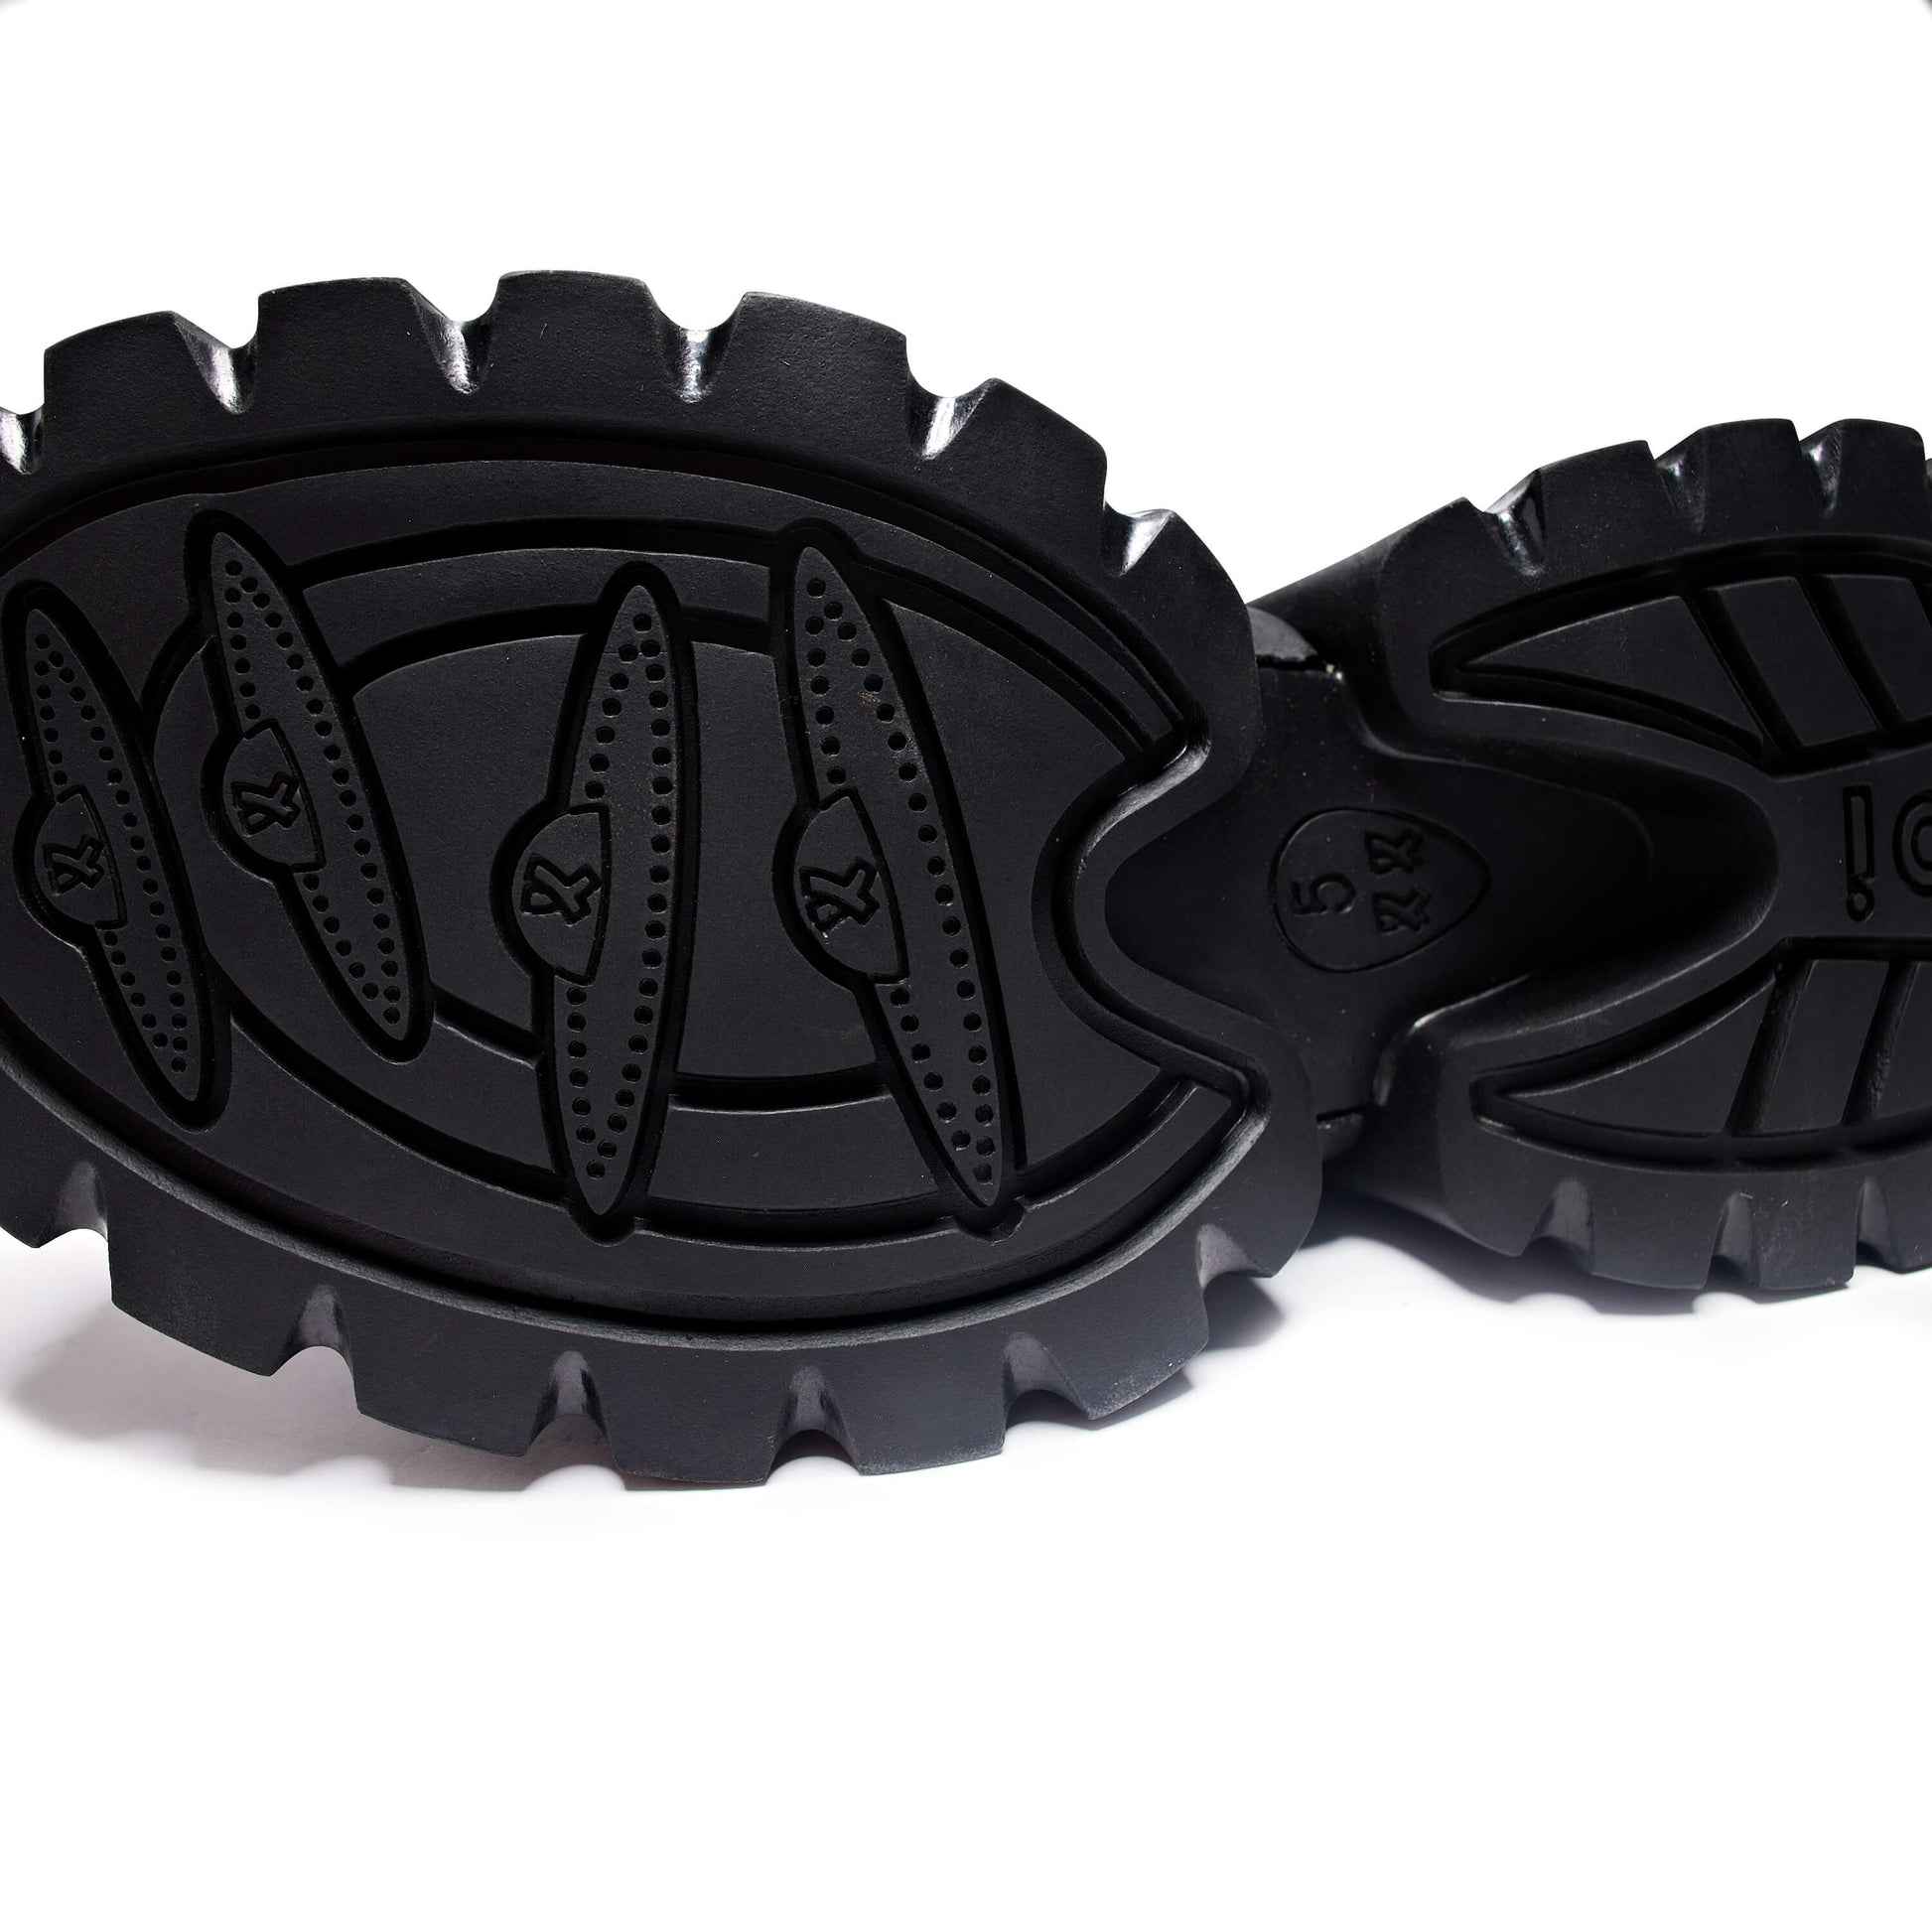 Chronicles Vilun Platform Trainers - Trainers - KOI Footwear - Black - Sole Detail